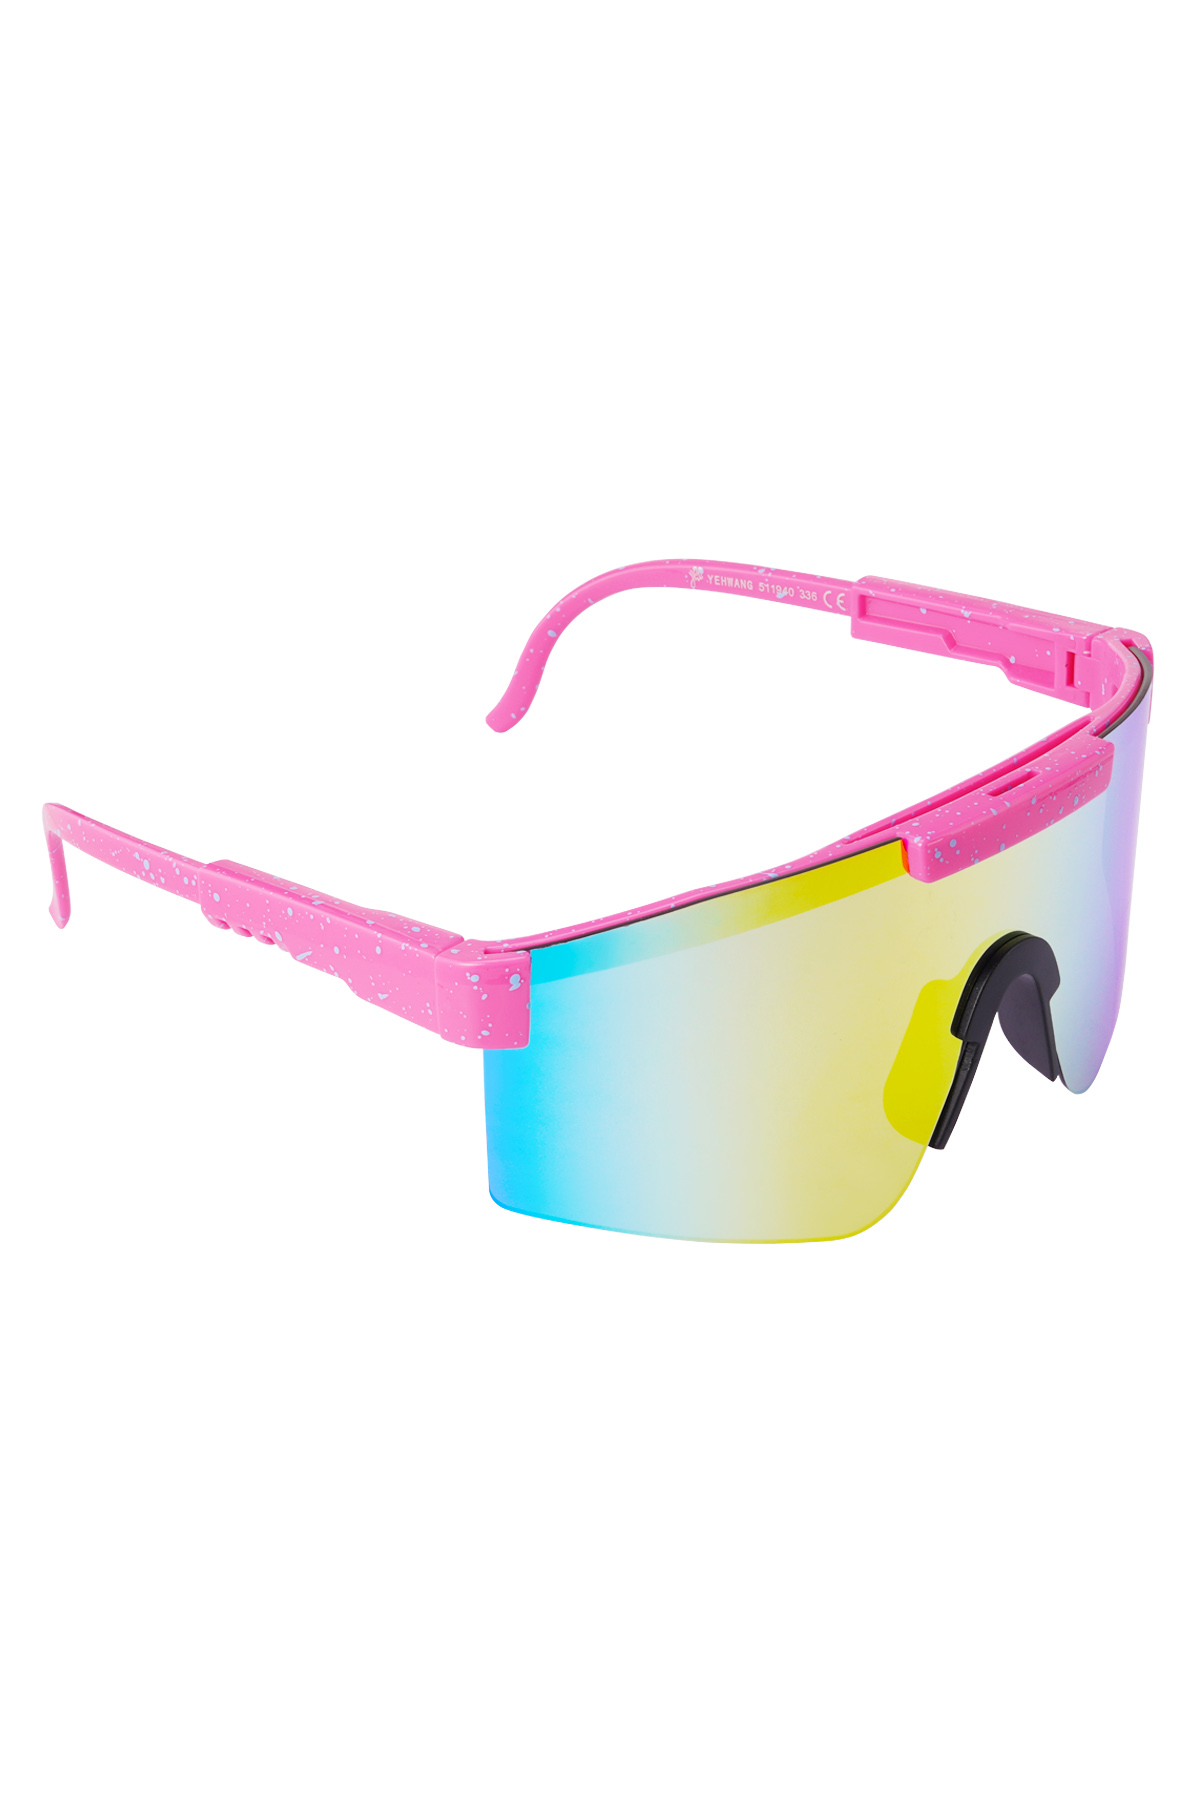 Sunglasses print colored lenses - pink 